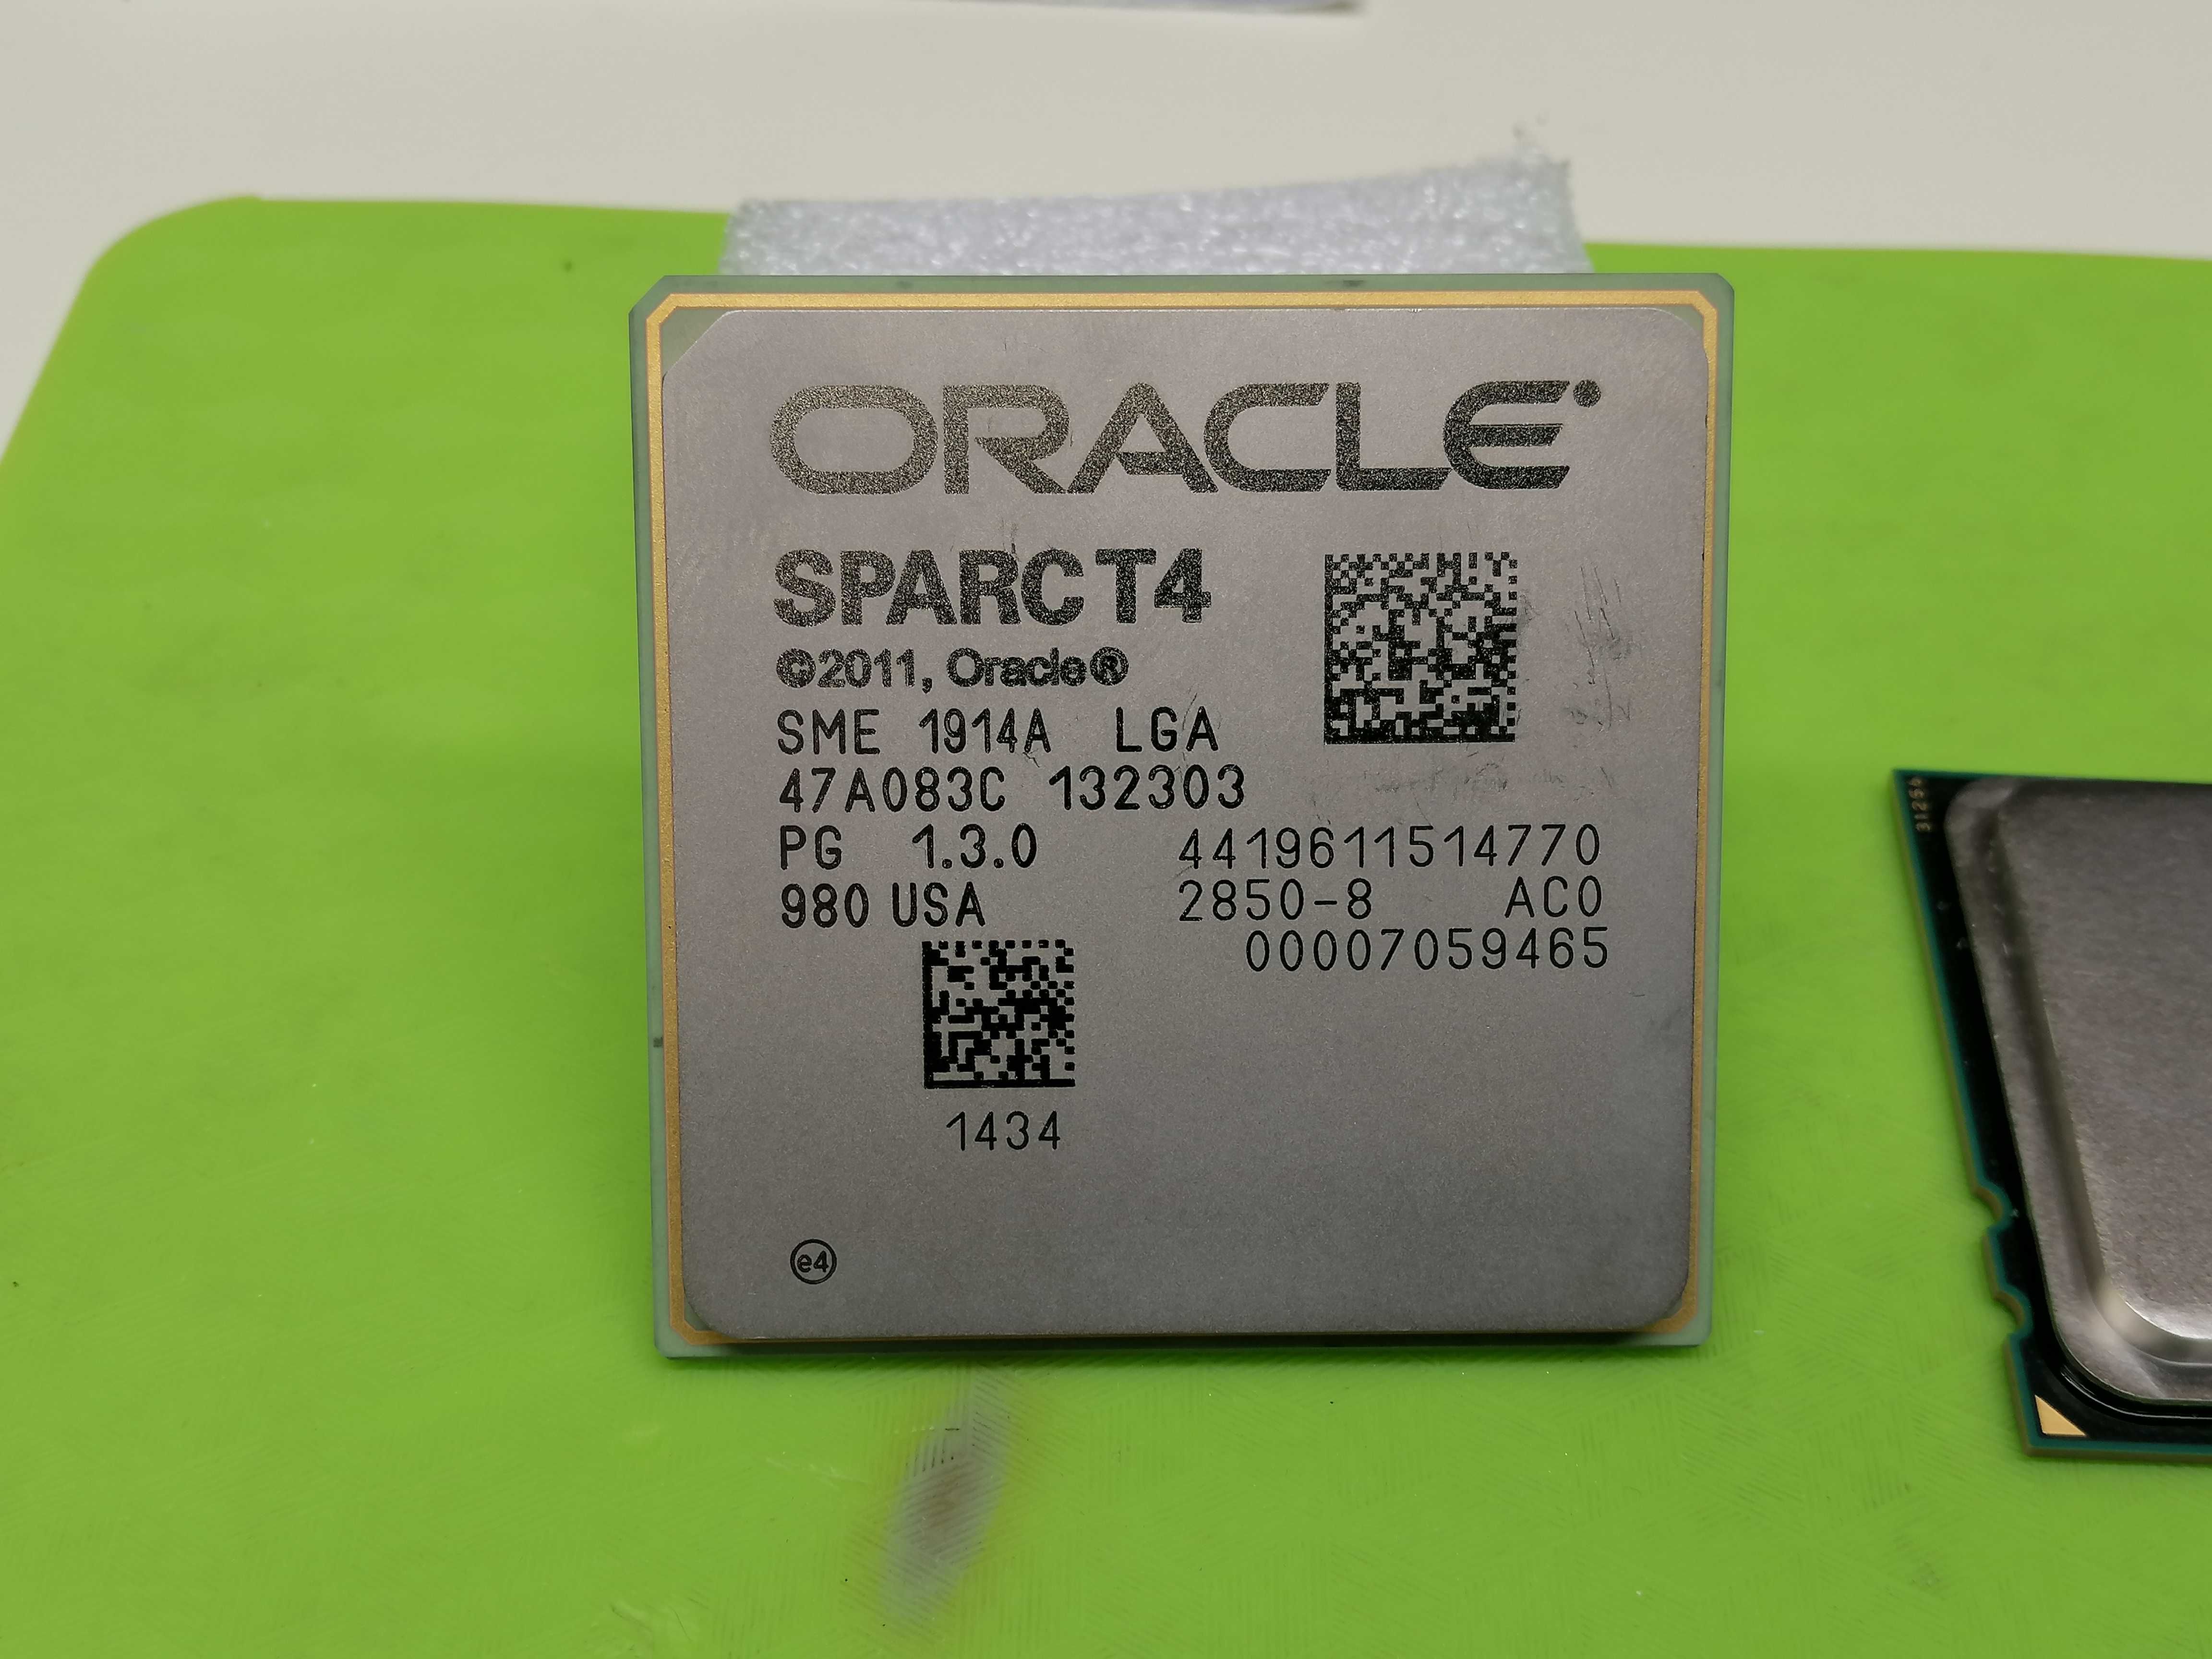 Oracle Sparc T4 Processor 3,0GHz 8core /64-threads (SME 1914A LGA)